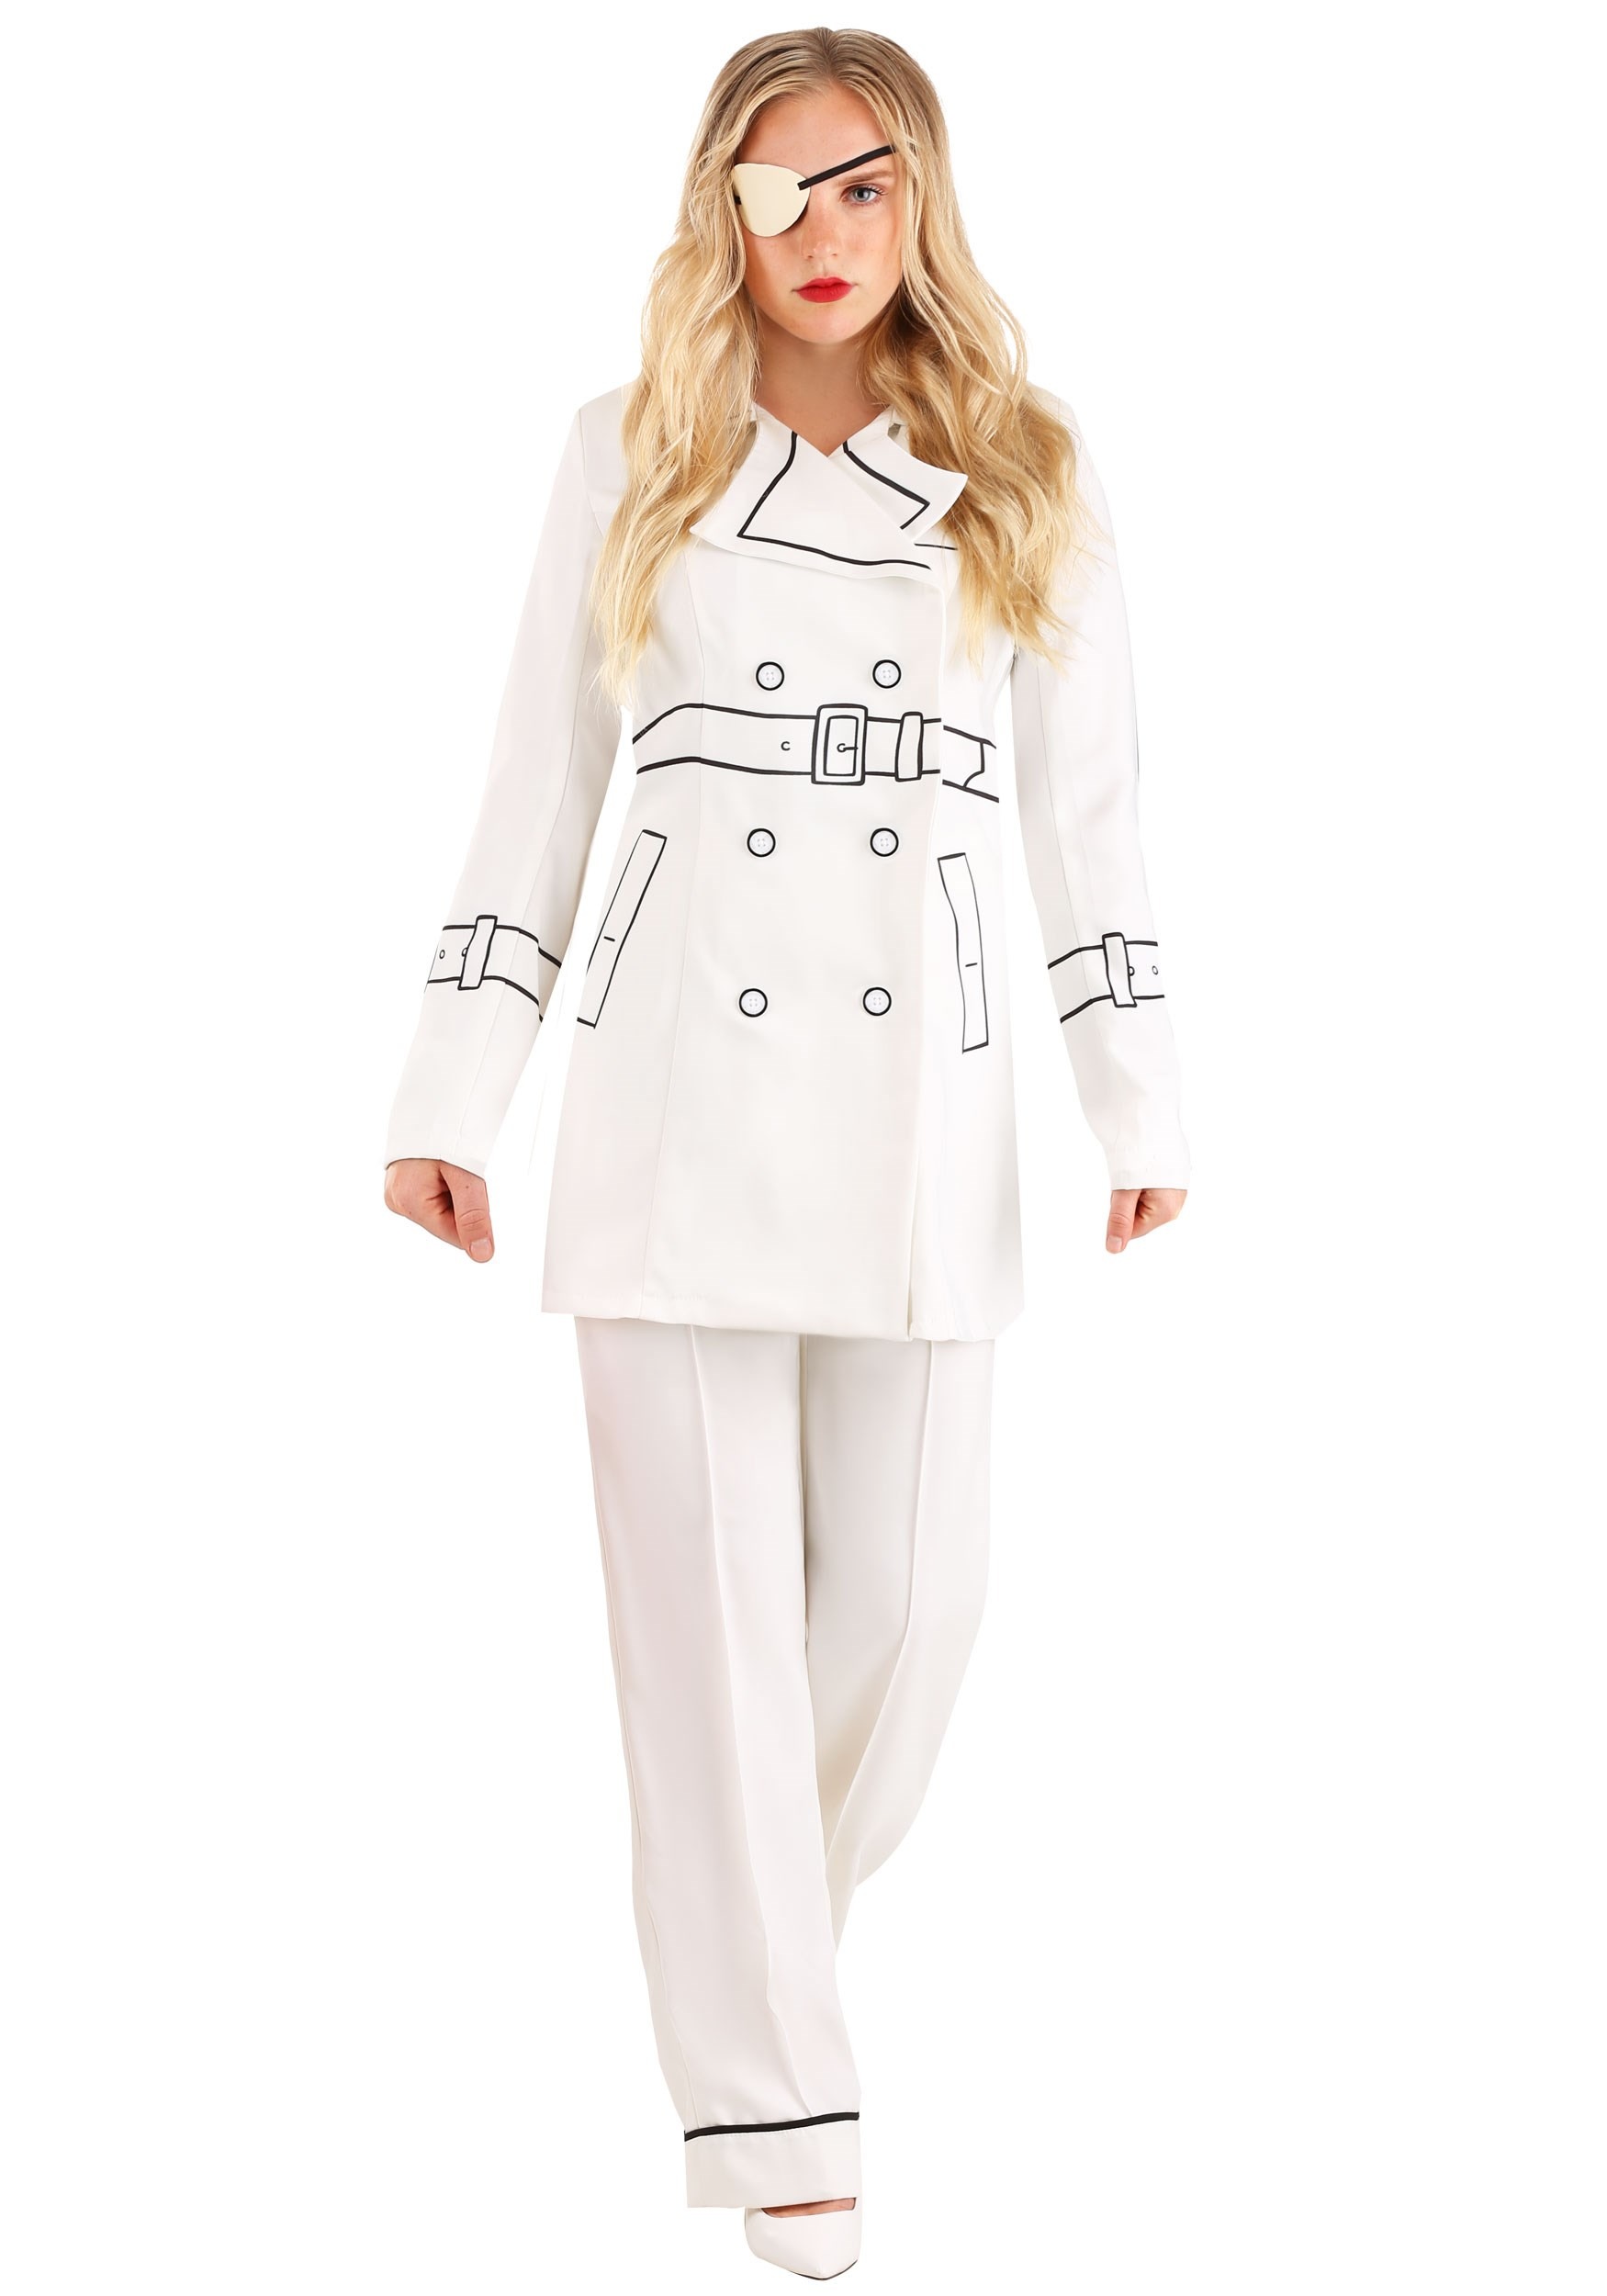 Image of Kill Bill Elle Driver Trench Coat Costume for Women ID FUN9316AD-XL